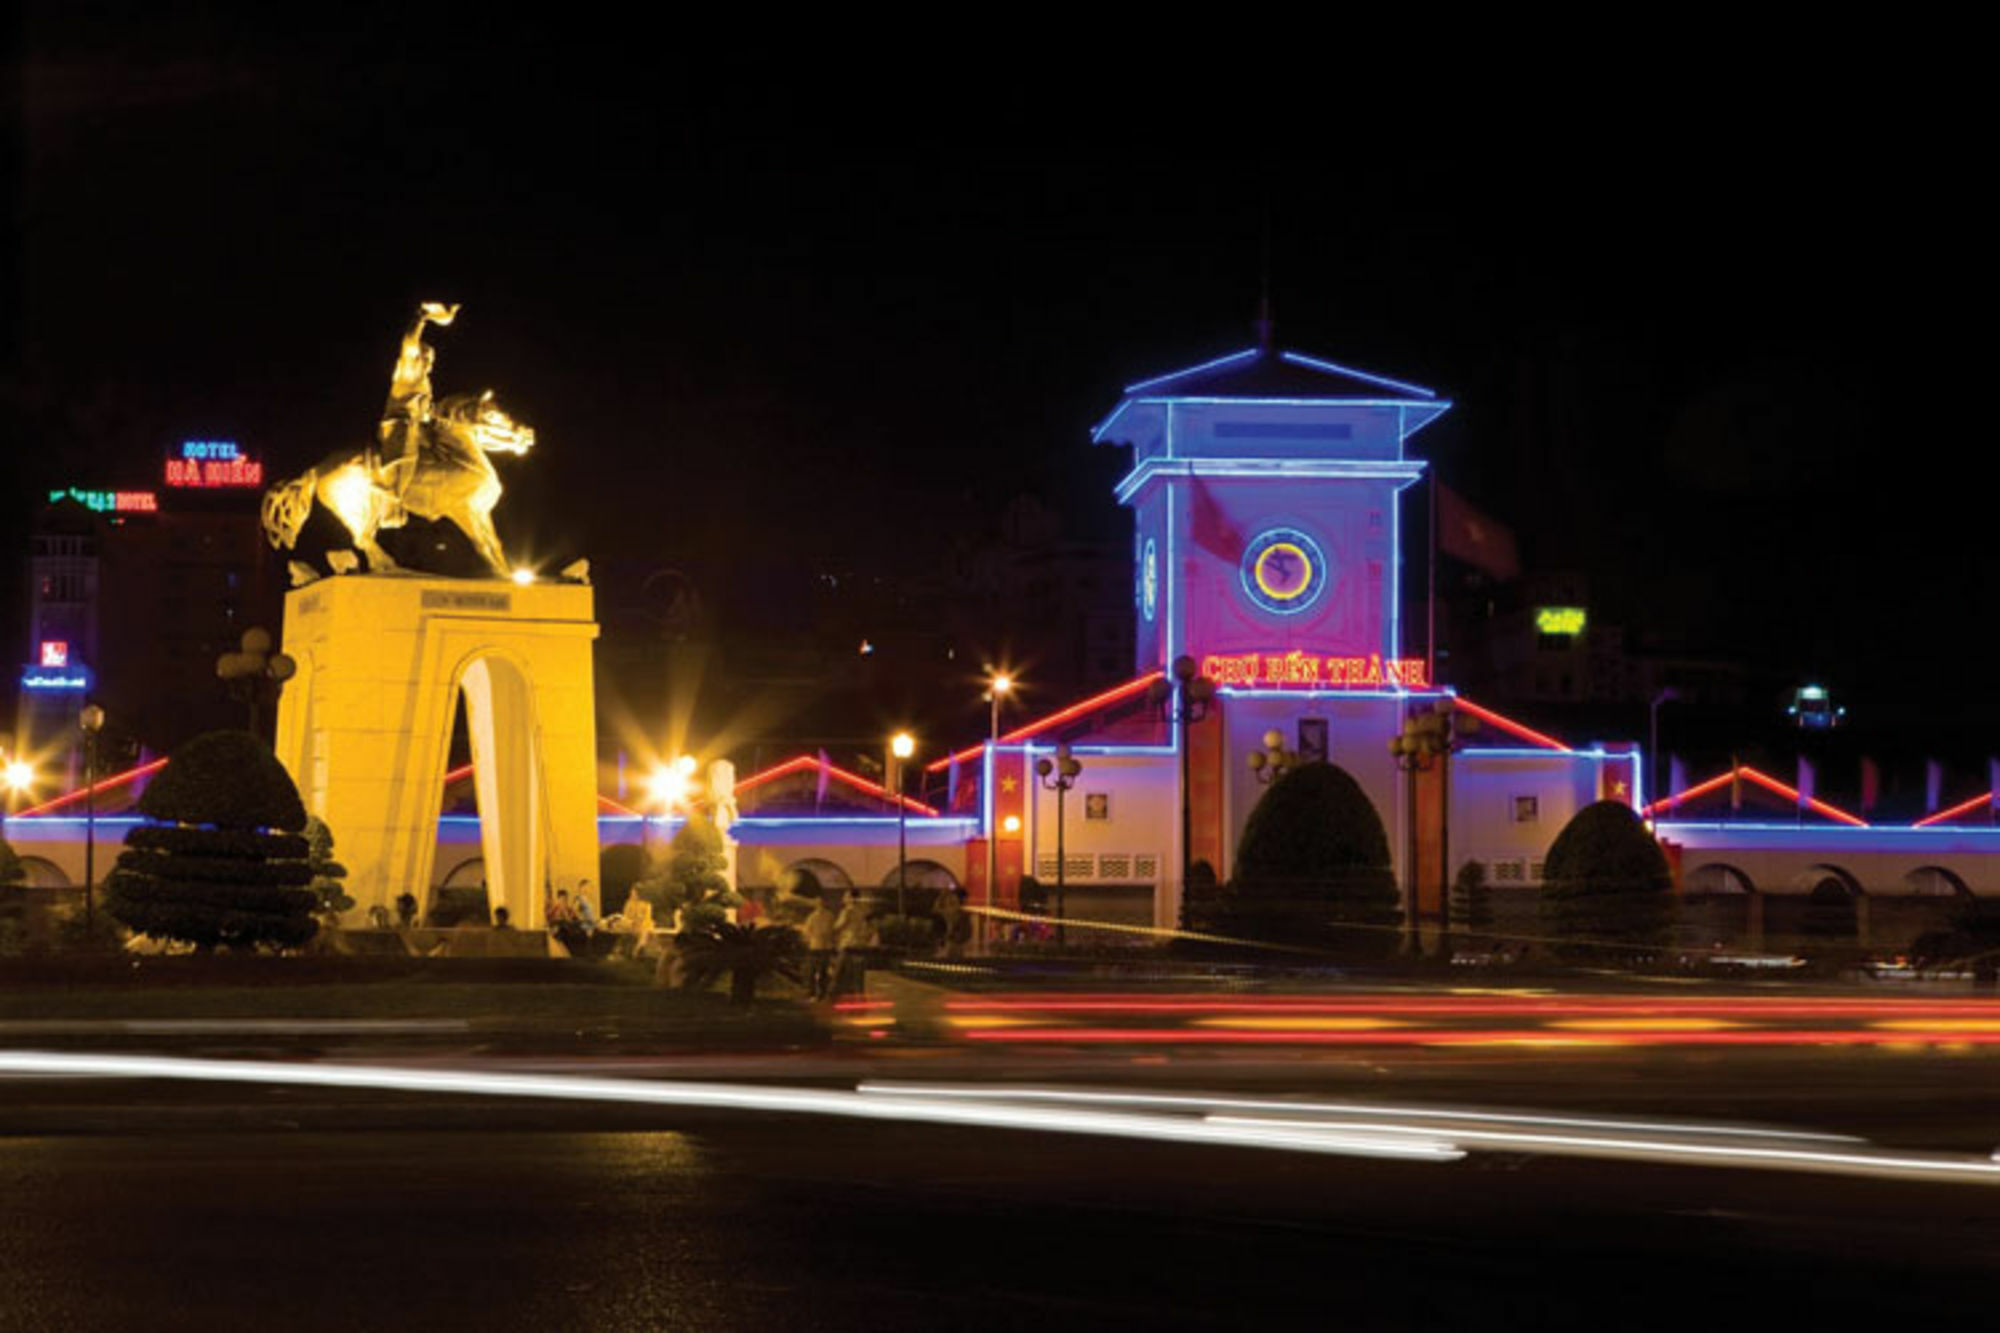 Roseland Centa Hotel & Spa Ho-Chi-Minh-Stadt Exterior foto